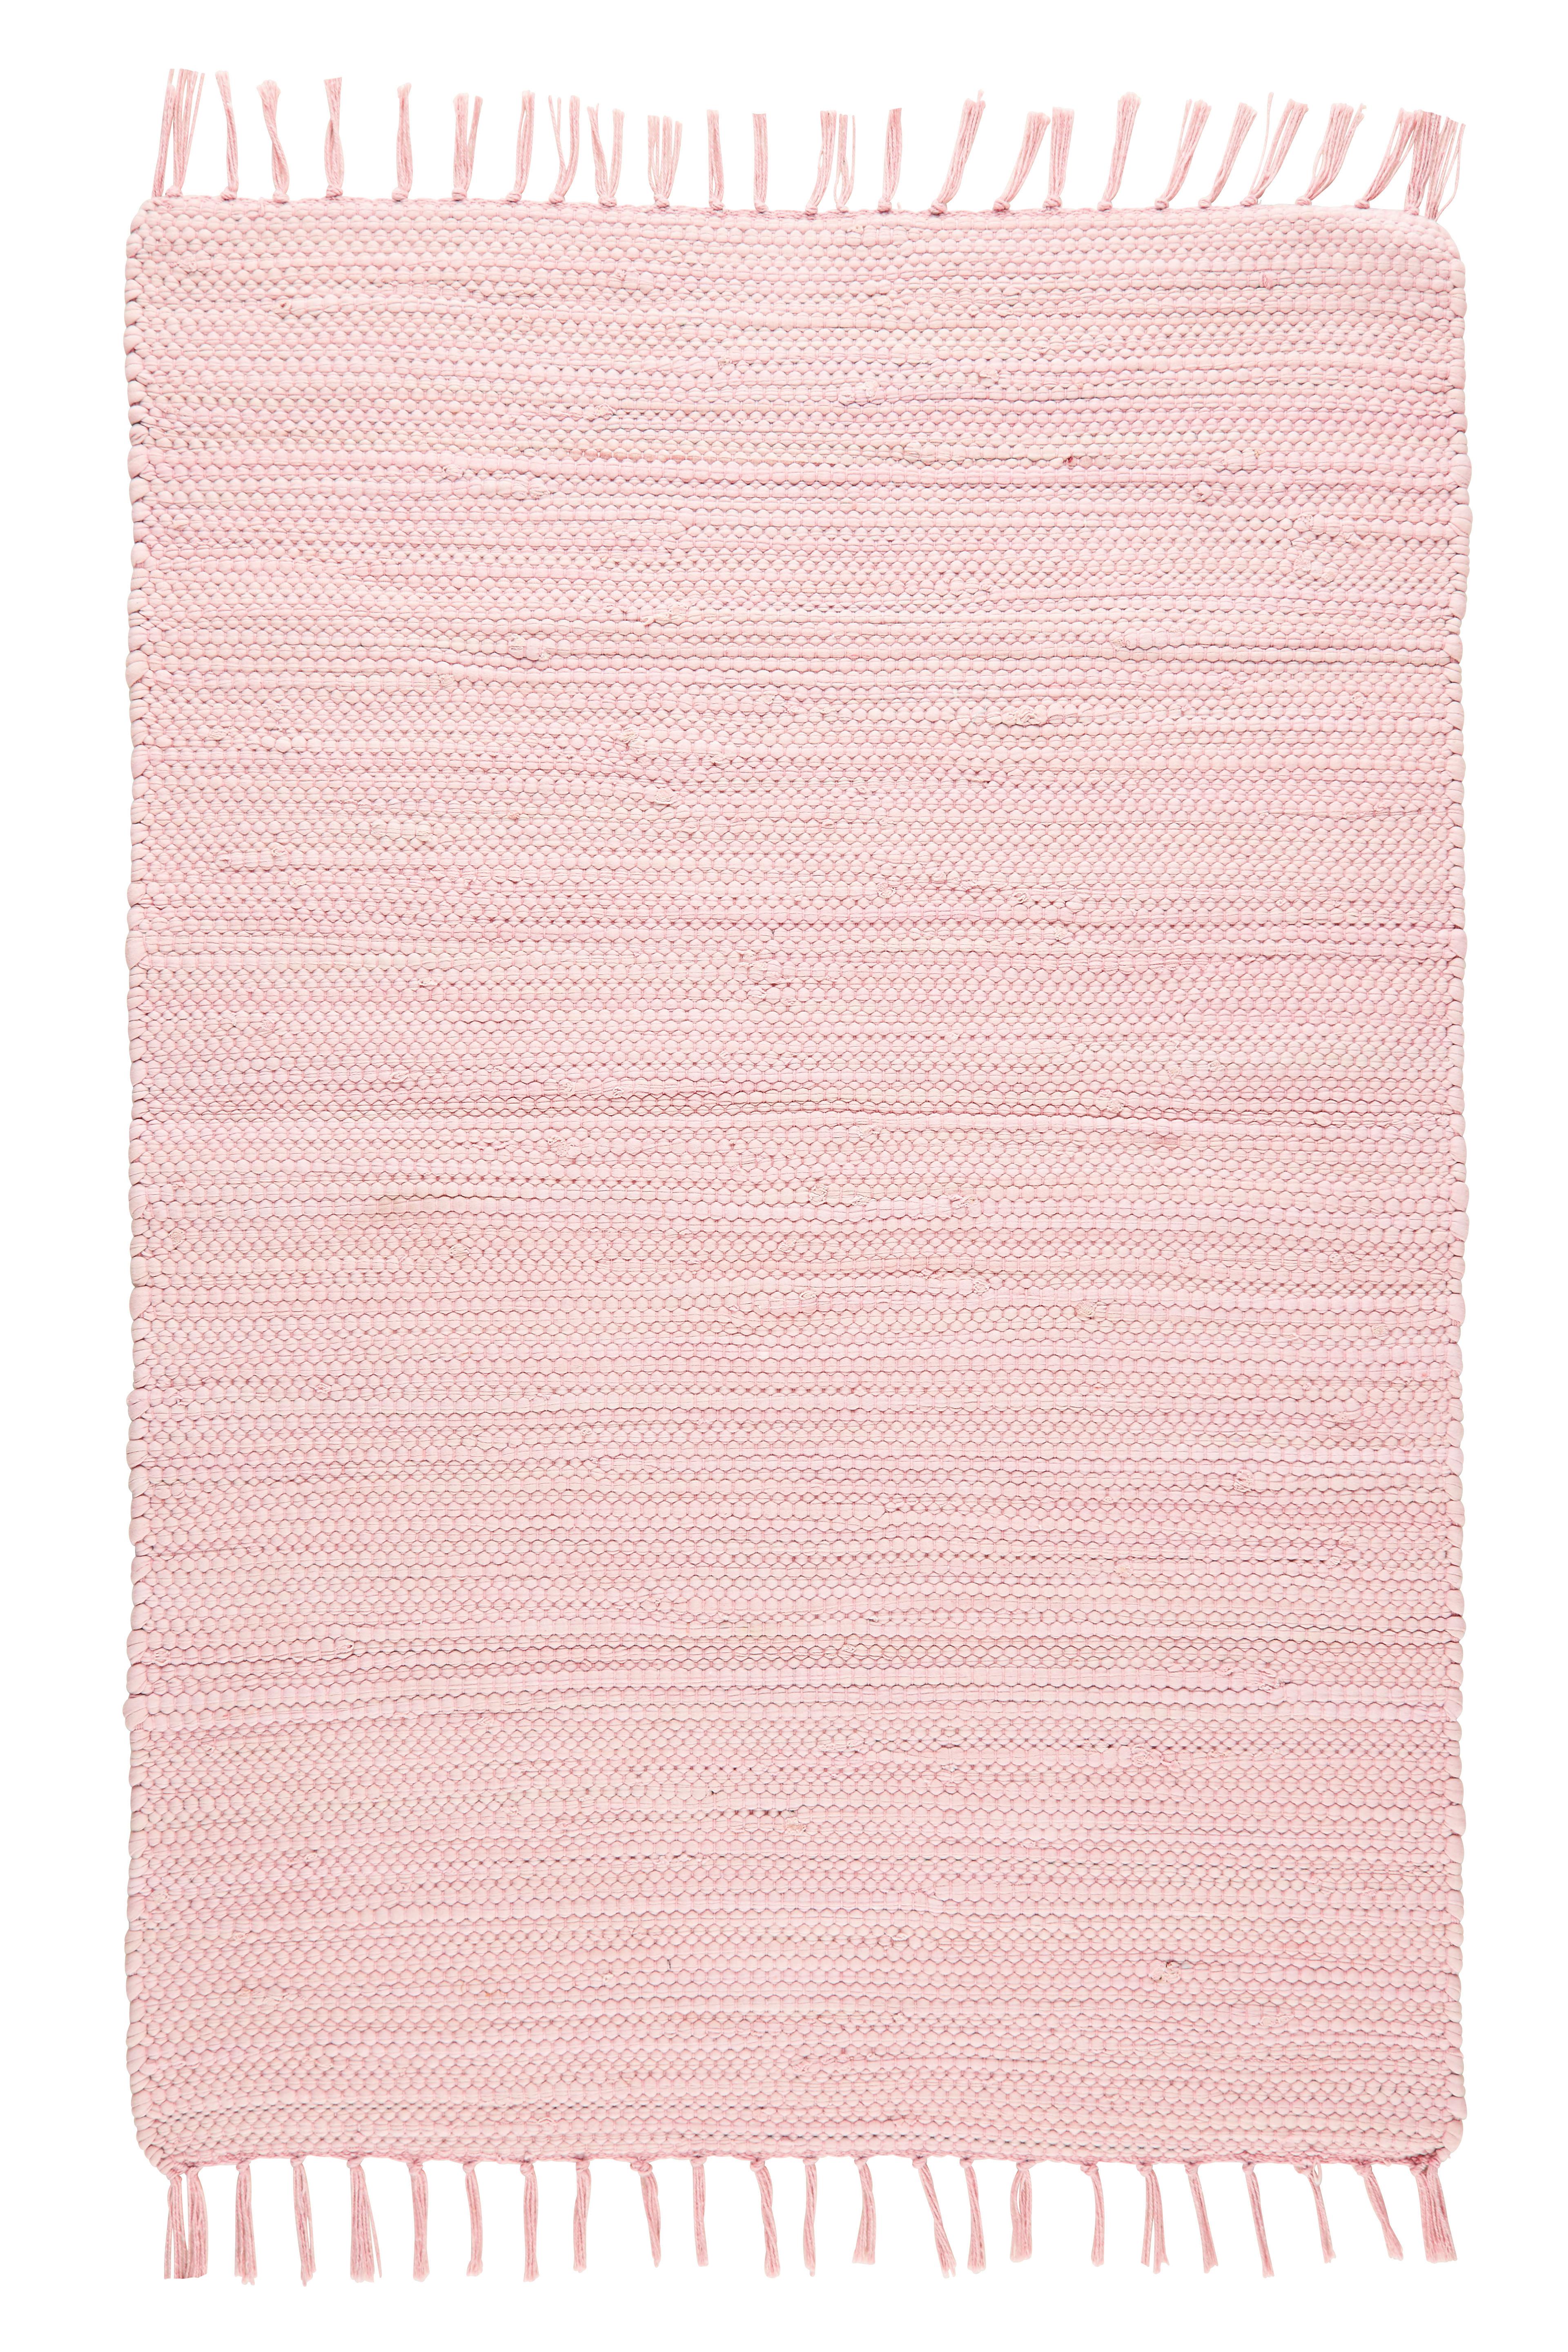 Hadrový Koberec Julia 1, 60/90cm, Růžová - růžová, Romantický / Rustikální, textil (60/90cm) - Modern Living